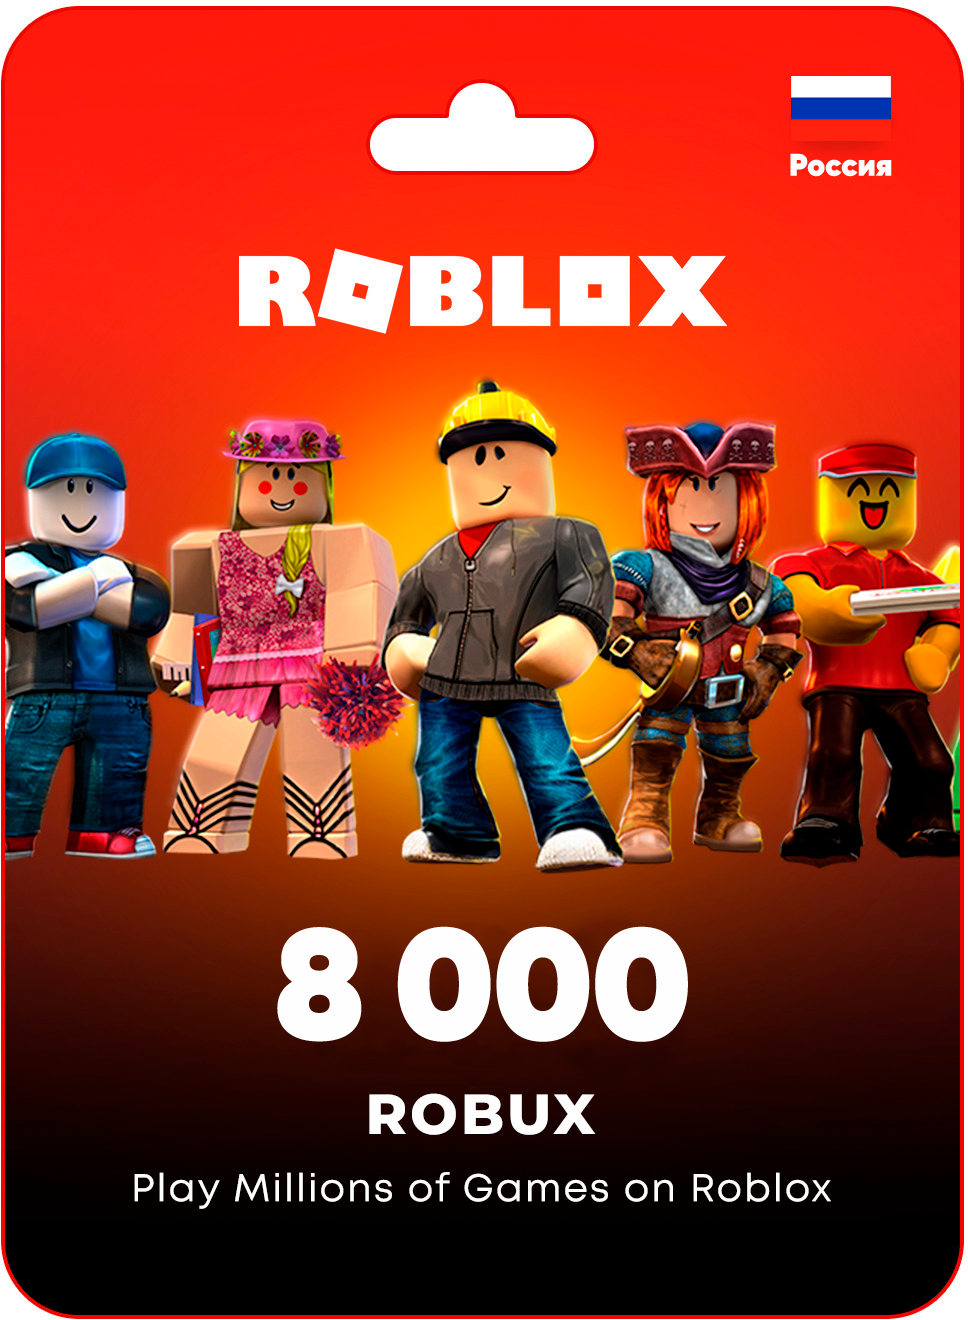 Пополнение счета Roblox на 8000 Robux / Код активации Робуксы / Подарочная карта Роблокс / Gift Card (Россия)